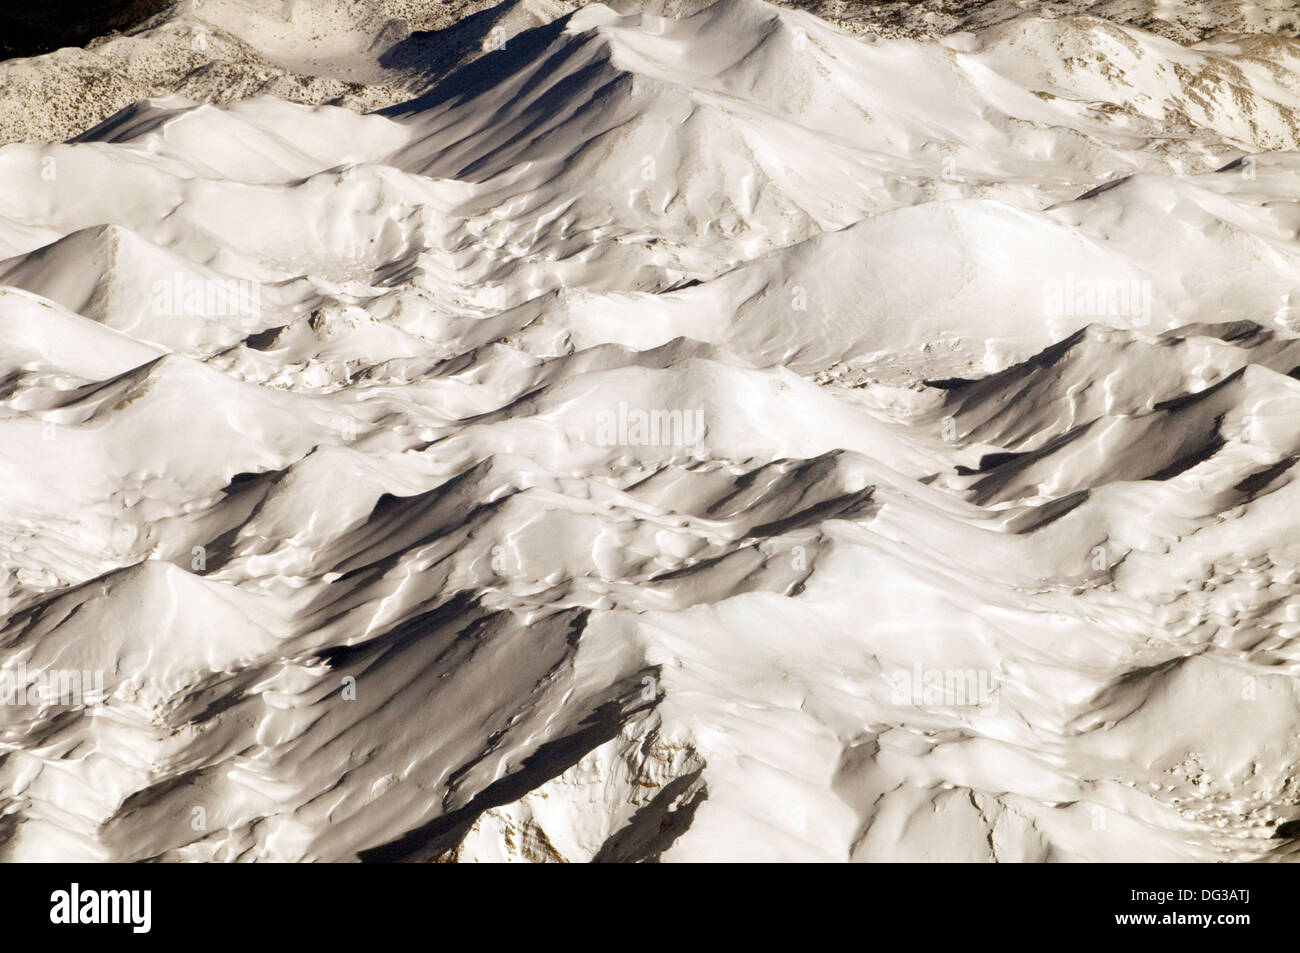 Aerial view of glistening white snow-clad mountain range of the Alps Stock Photo